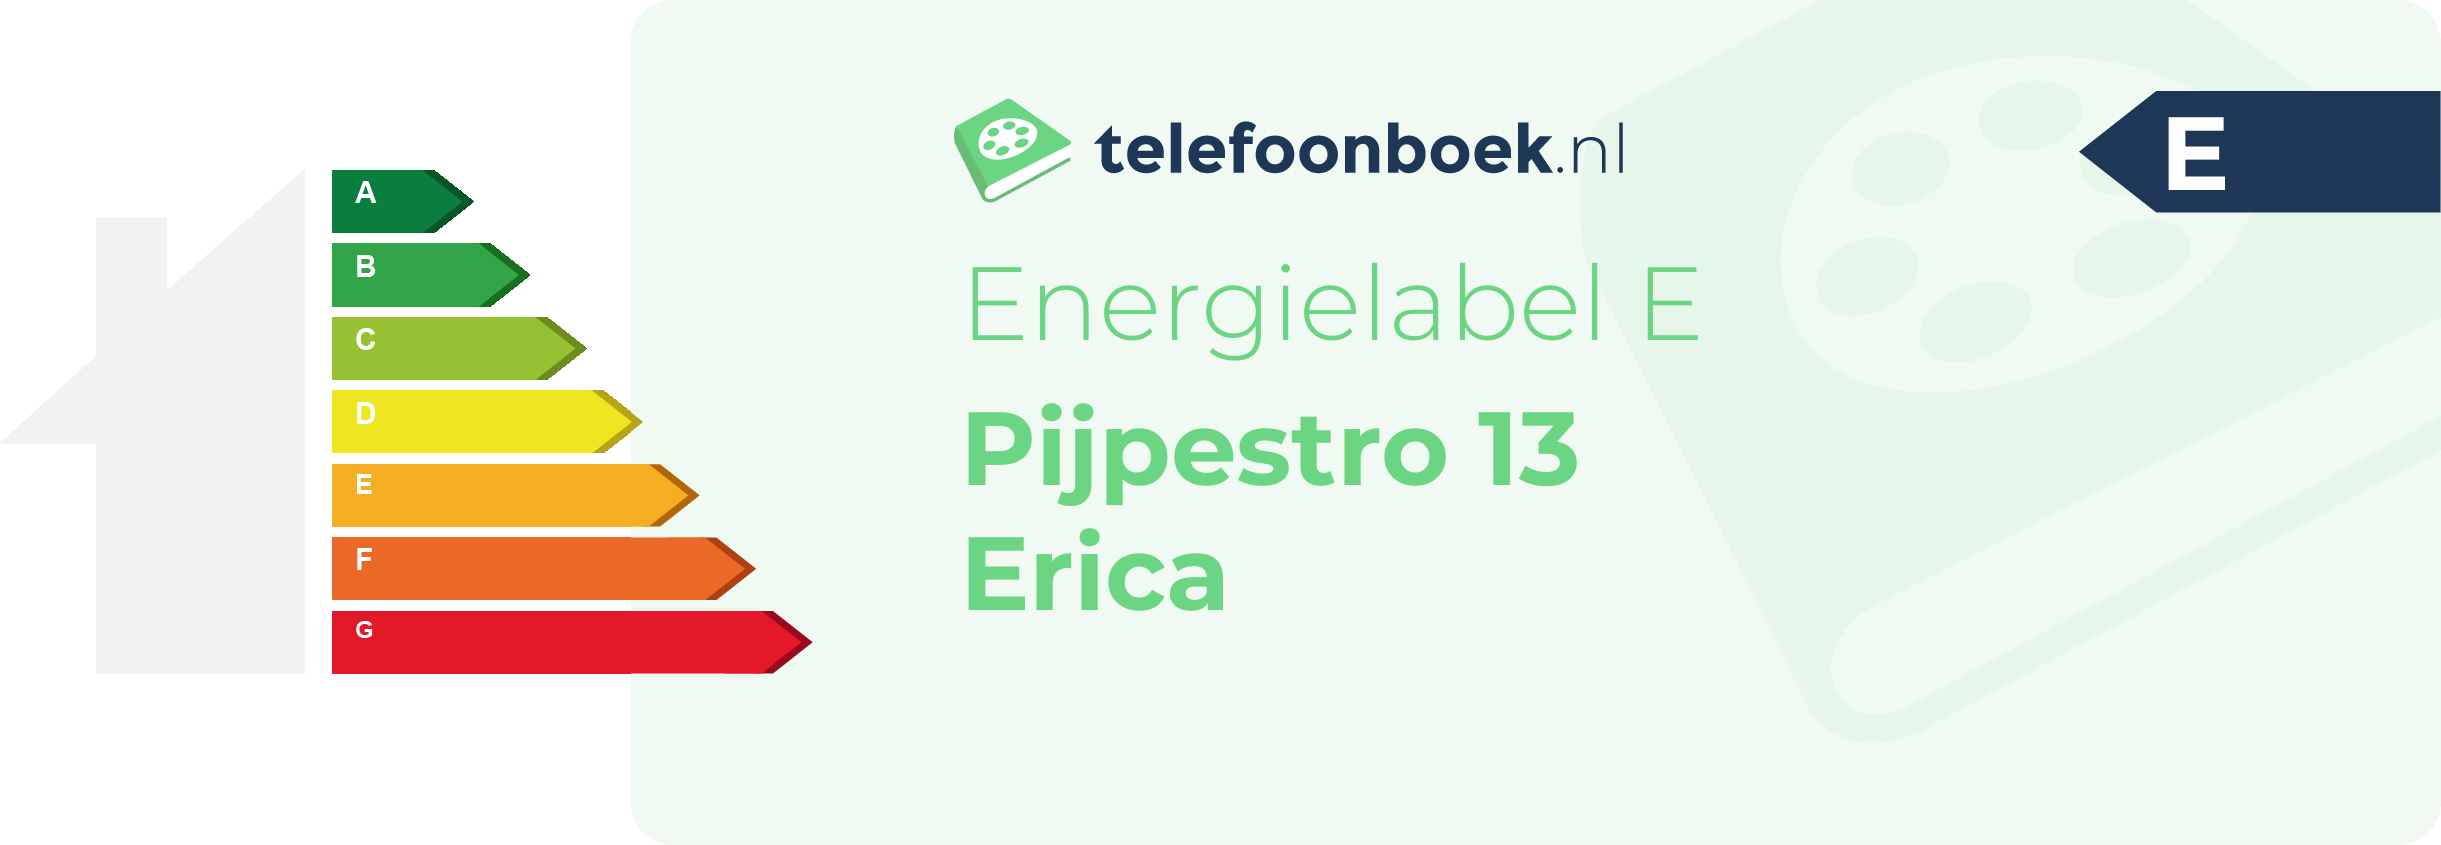 Energielabel Pijpestro 13 Erica